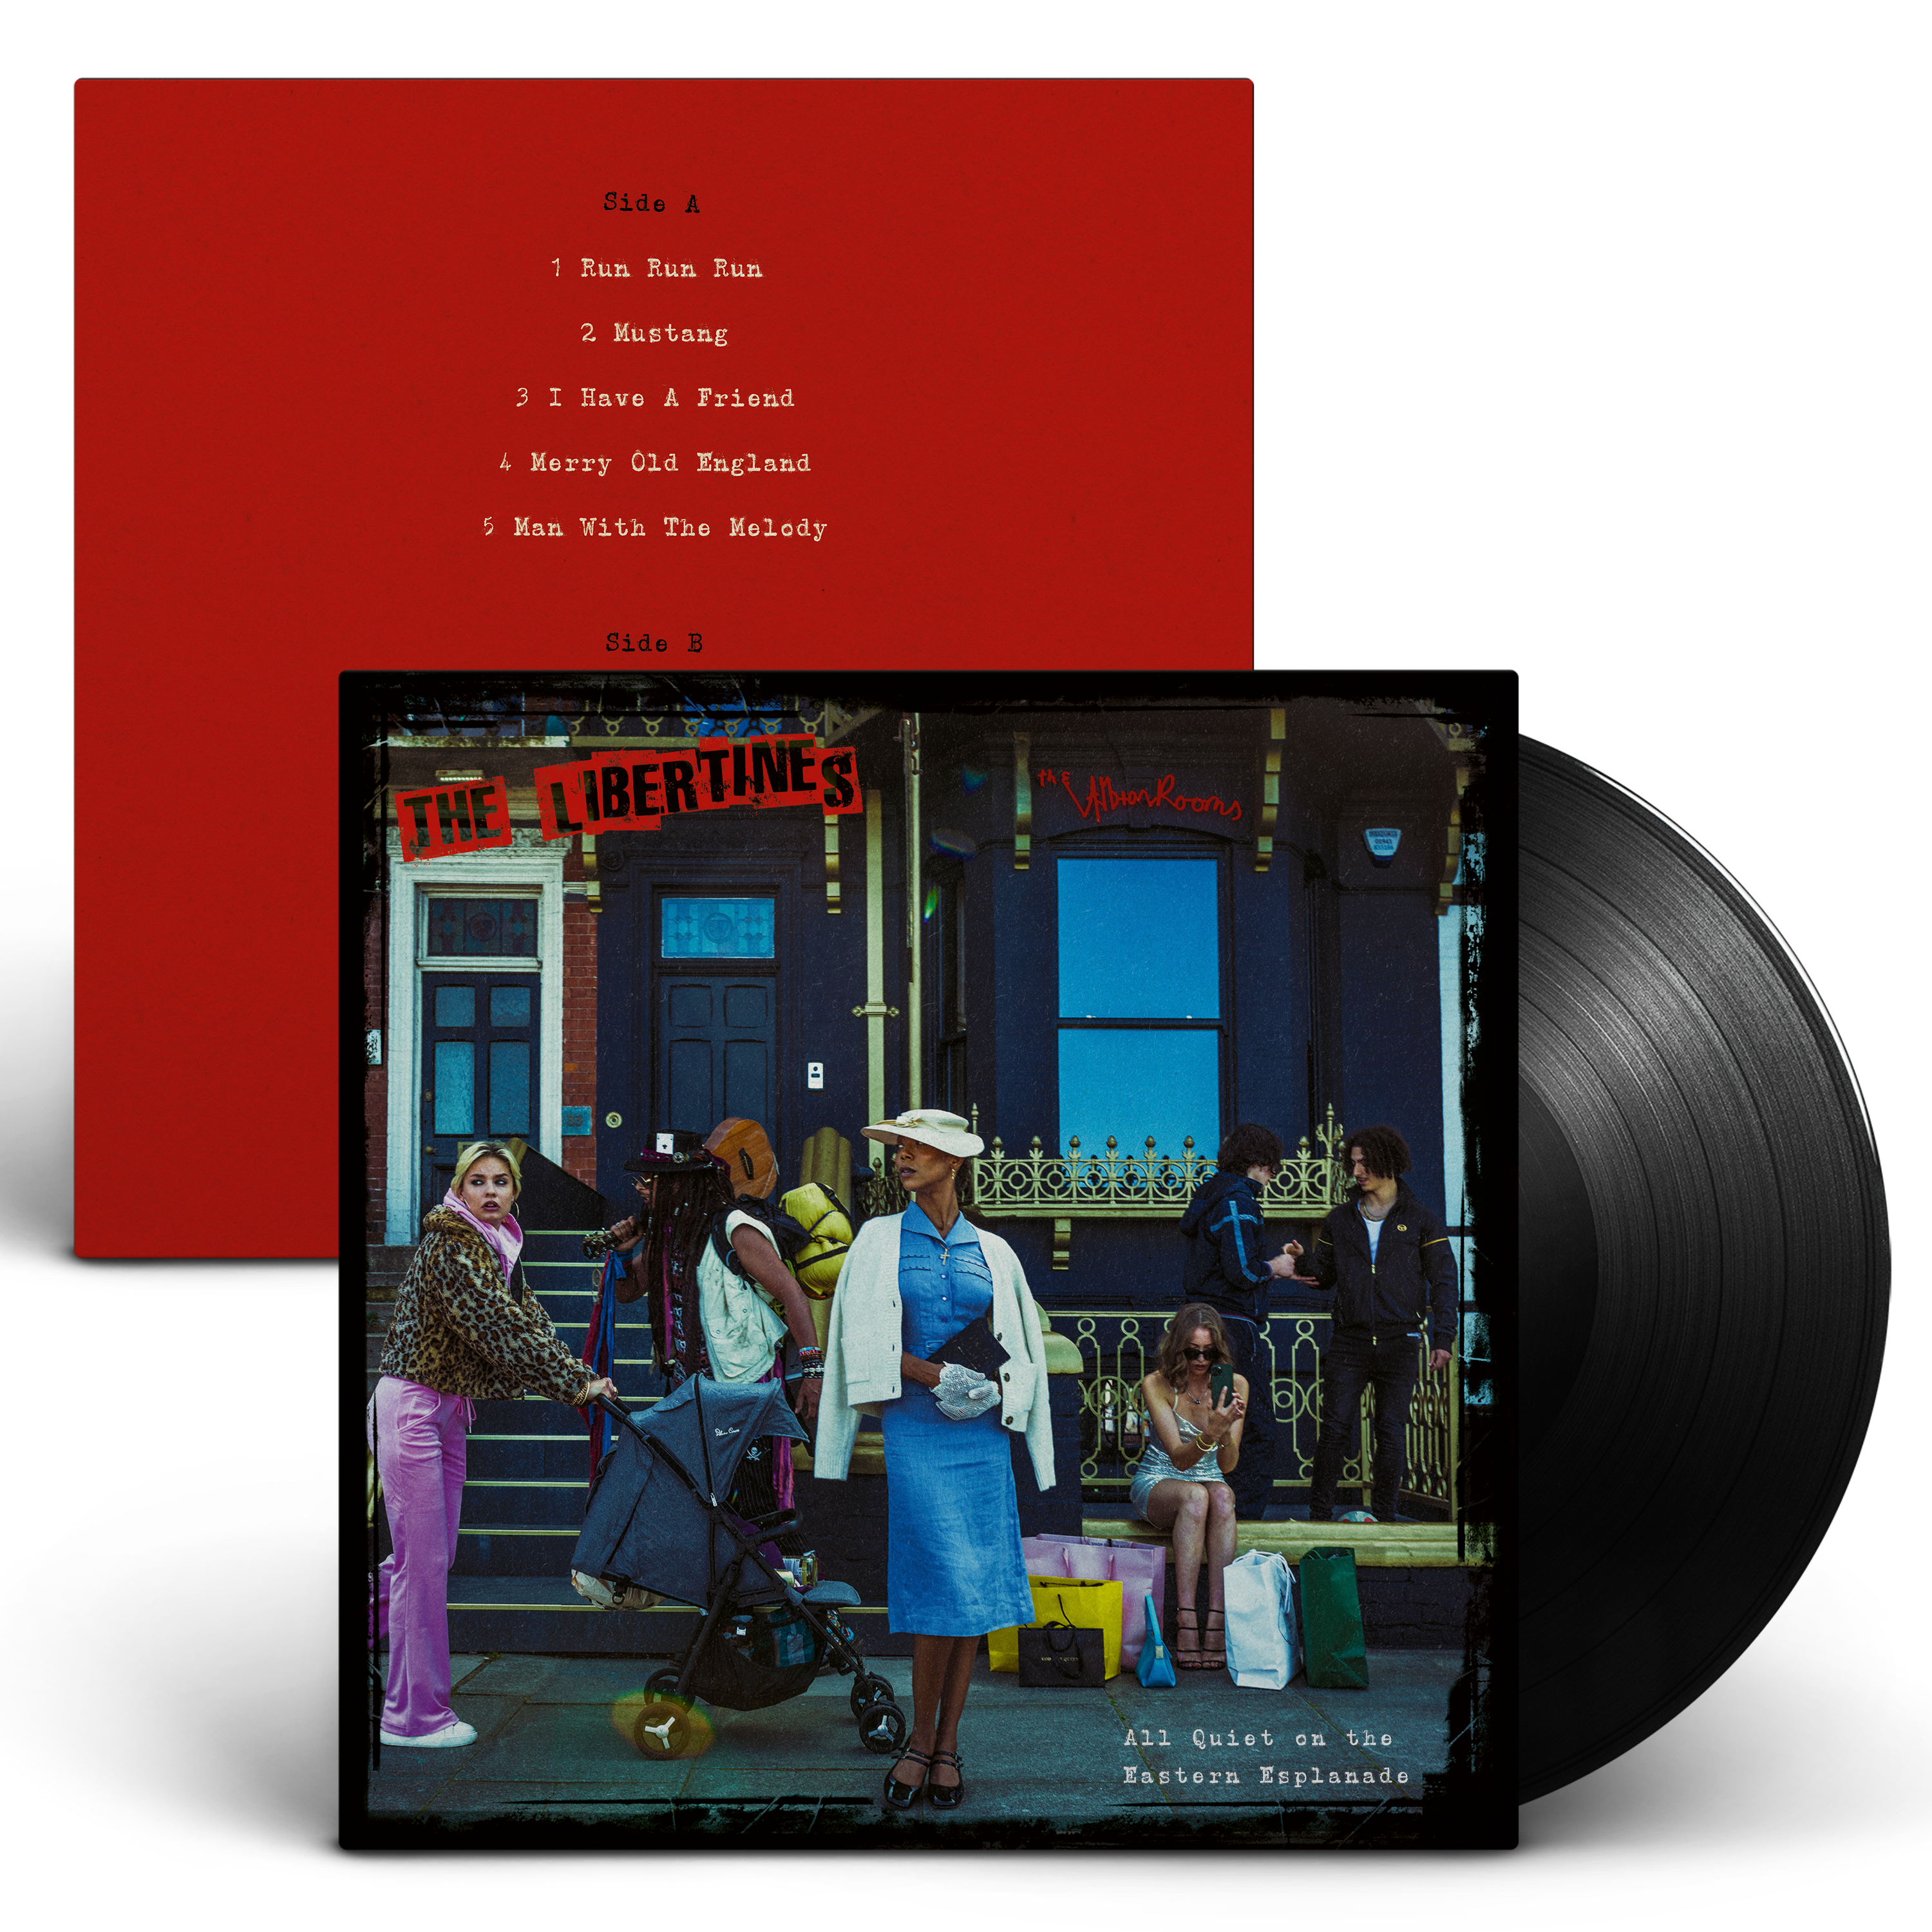 All Quiet On The Eastern Esplanade: Vinyl LP + Signed Print